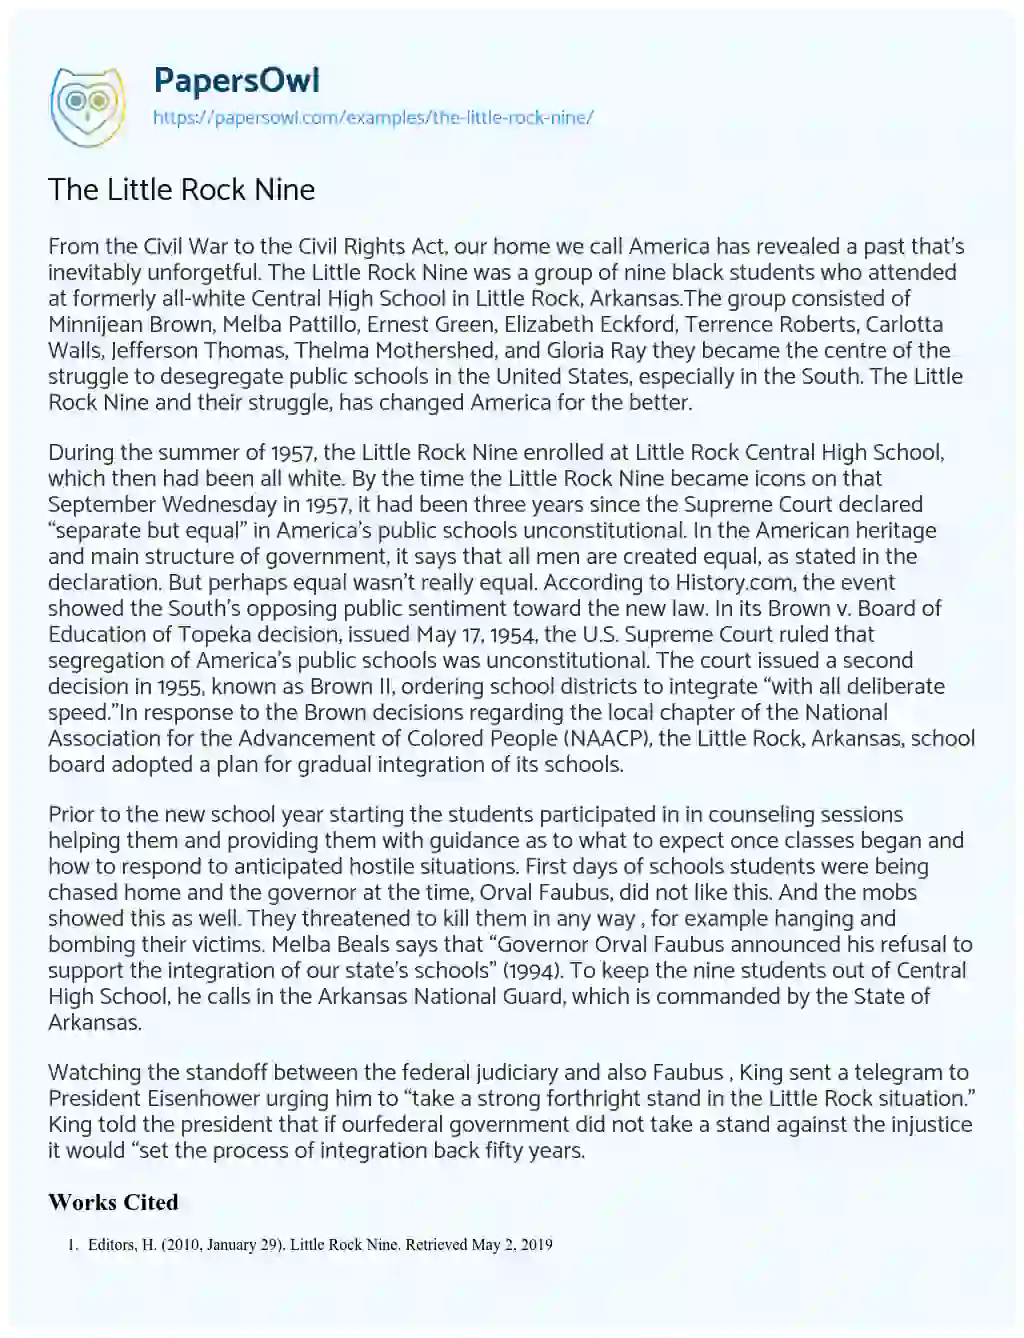 Essay on The Little Rock Nine